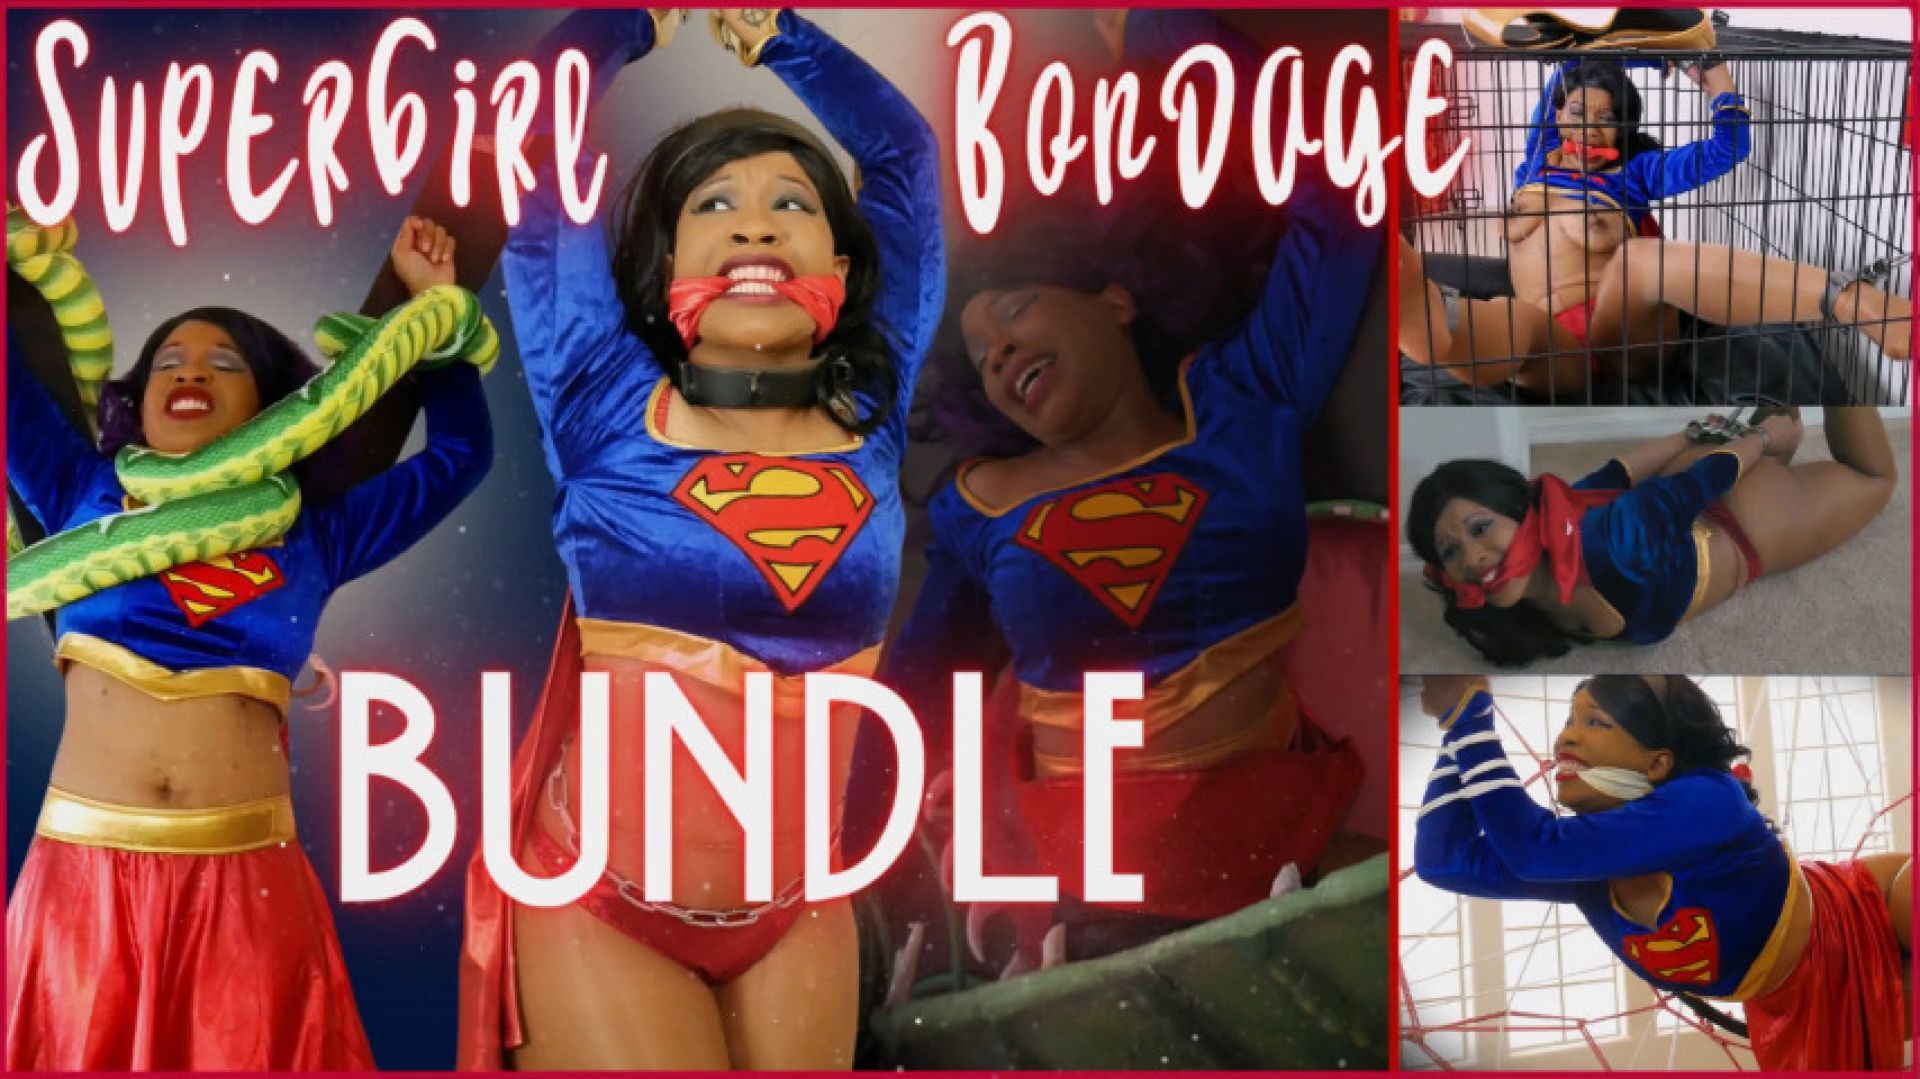 SuperGirl Bondage Bundle: VARIOUS SCENARIOS OF A SUPERHERO'S